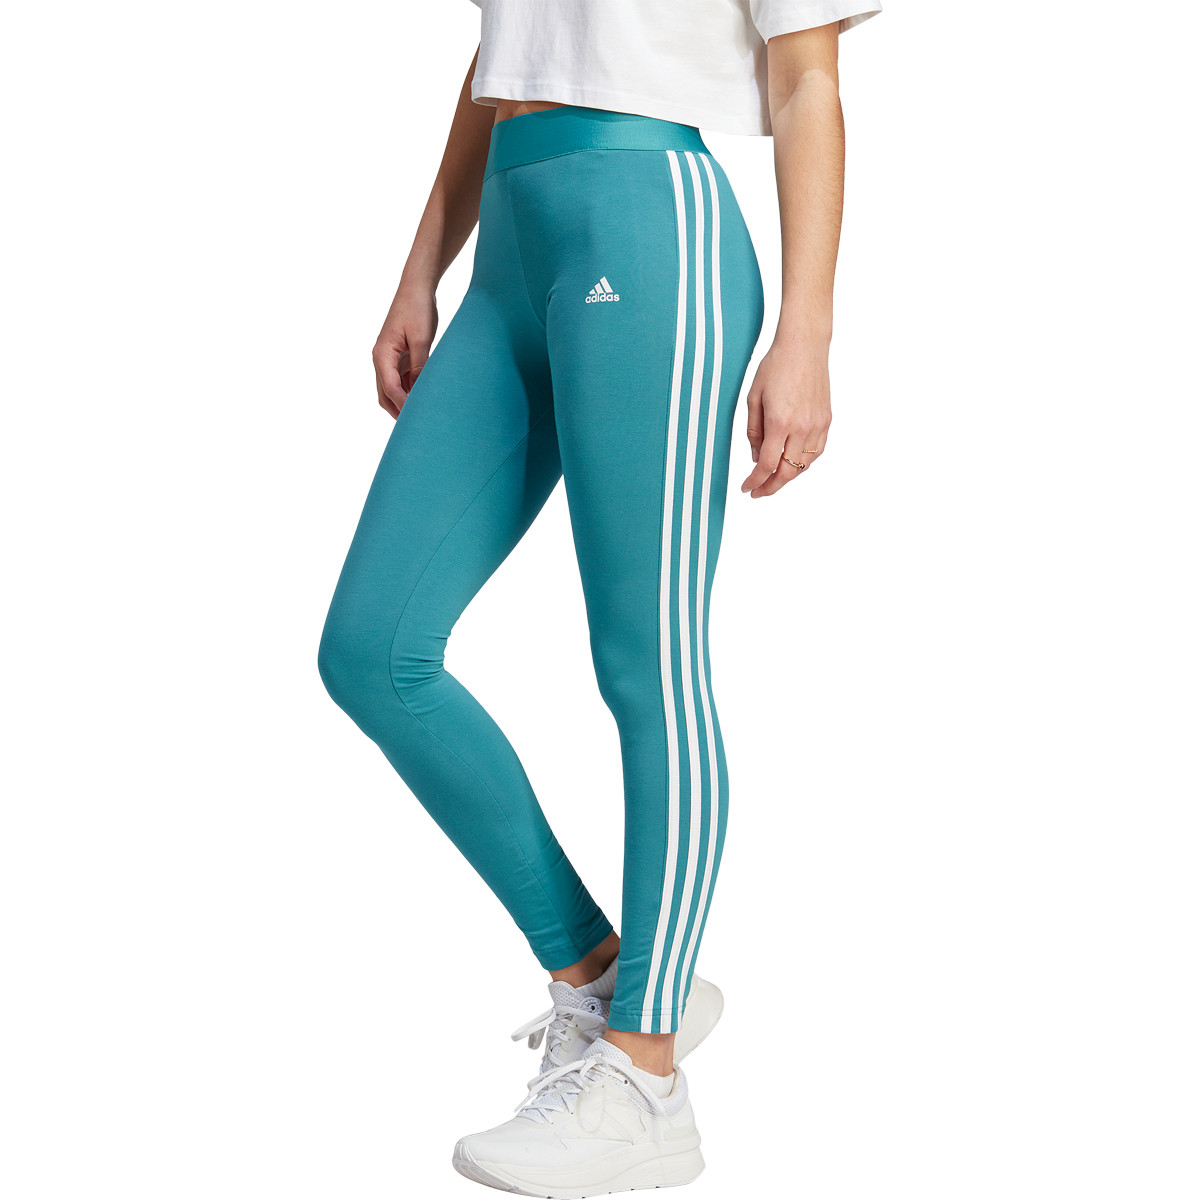 Adidas Women's Trousers & Leggings